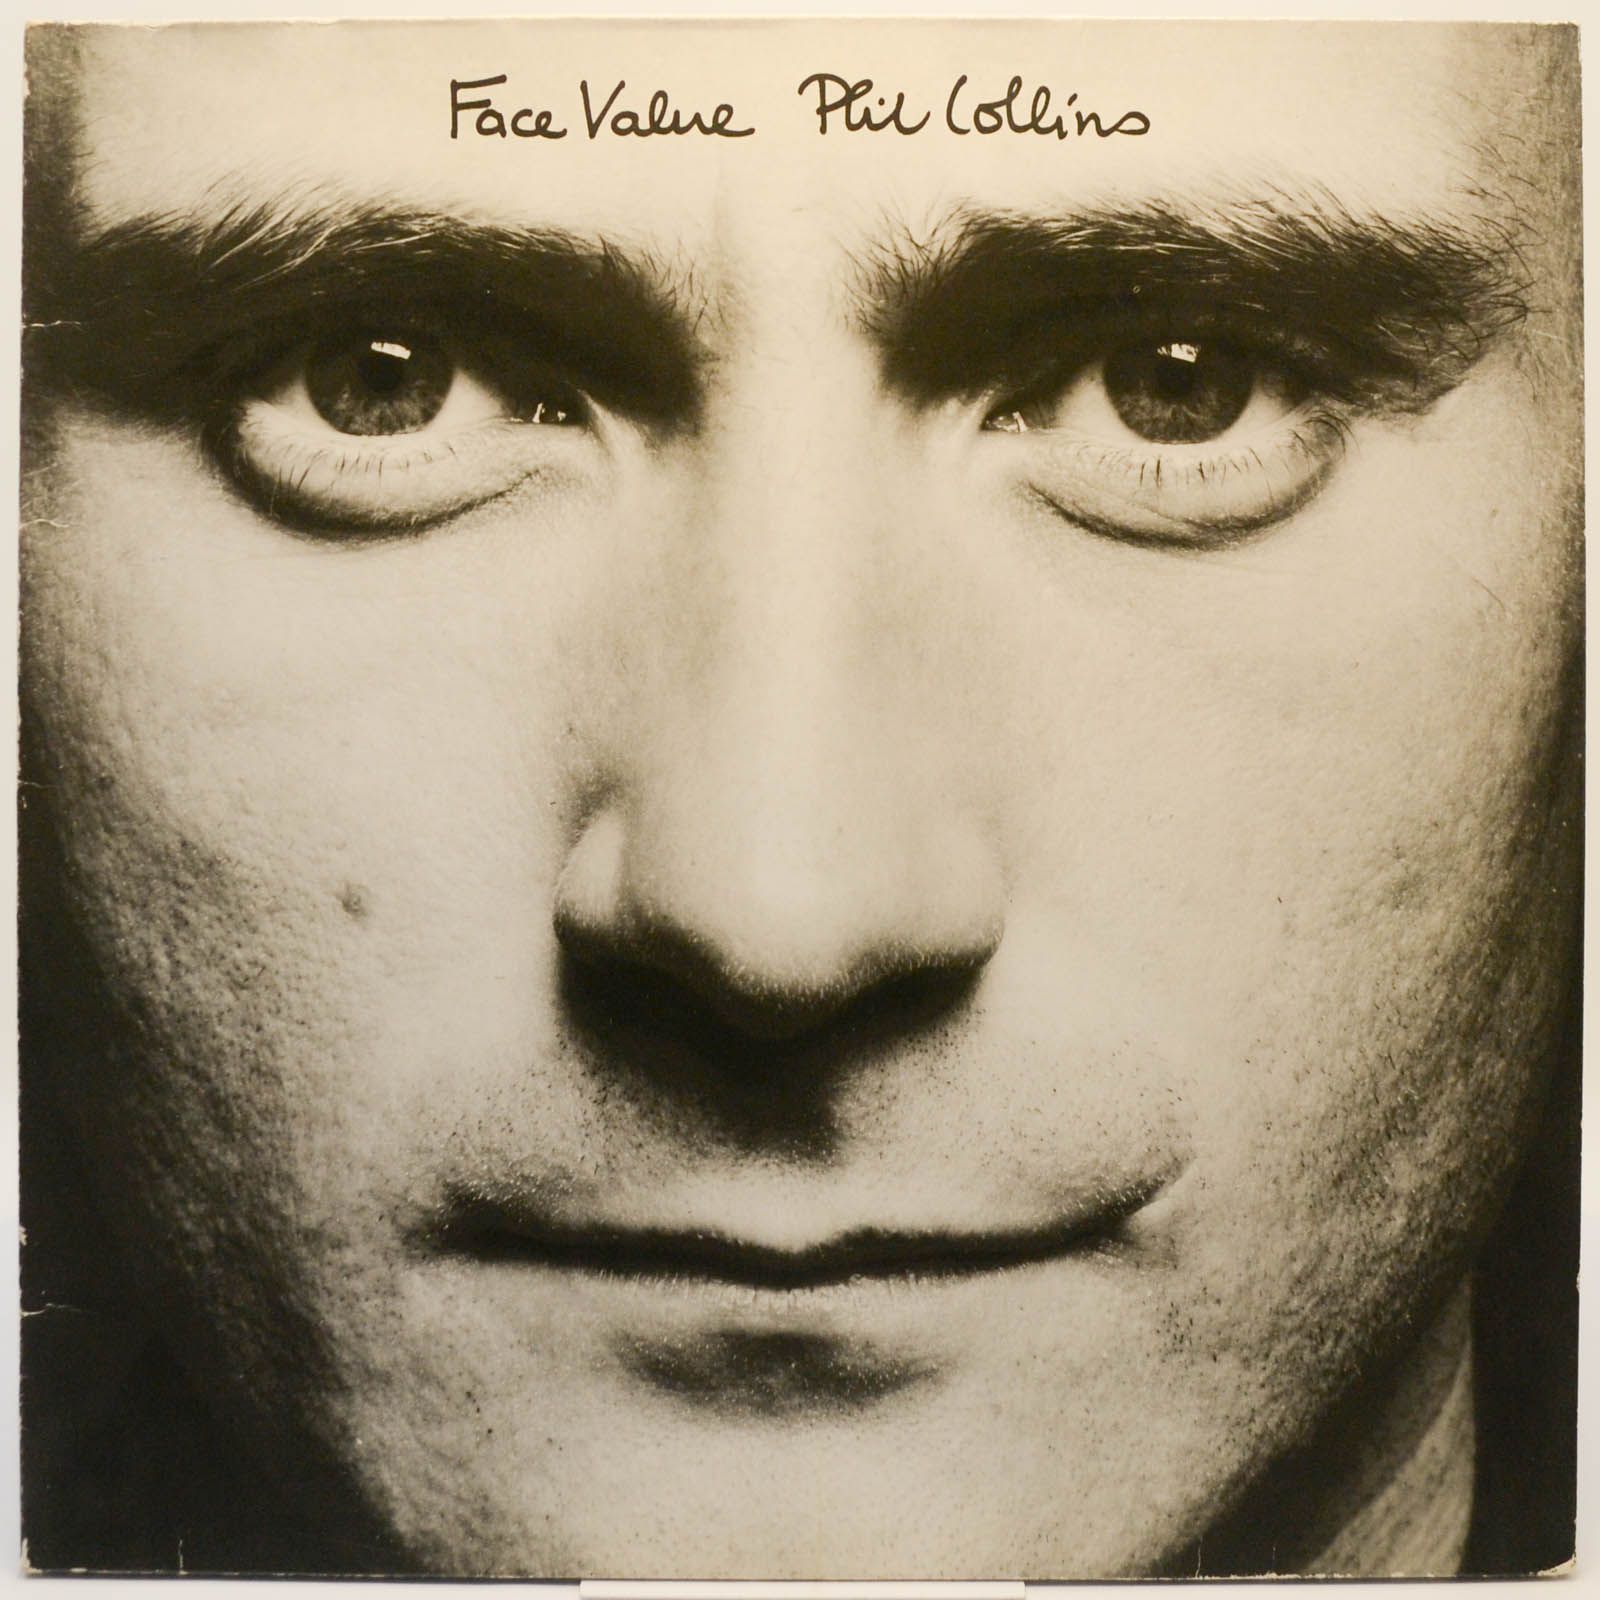 Phil Collins — Face Value, 1981